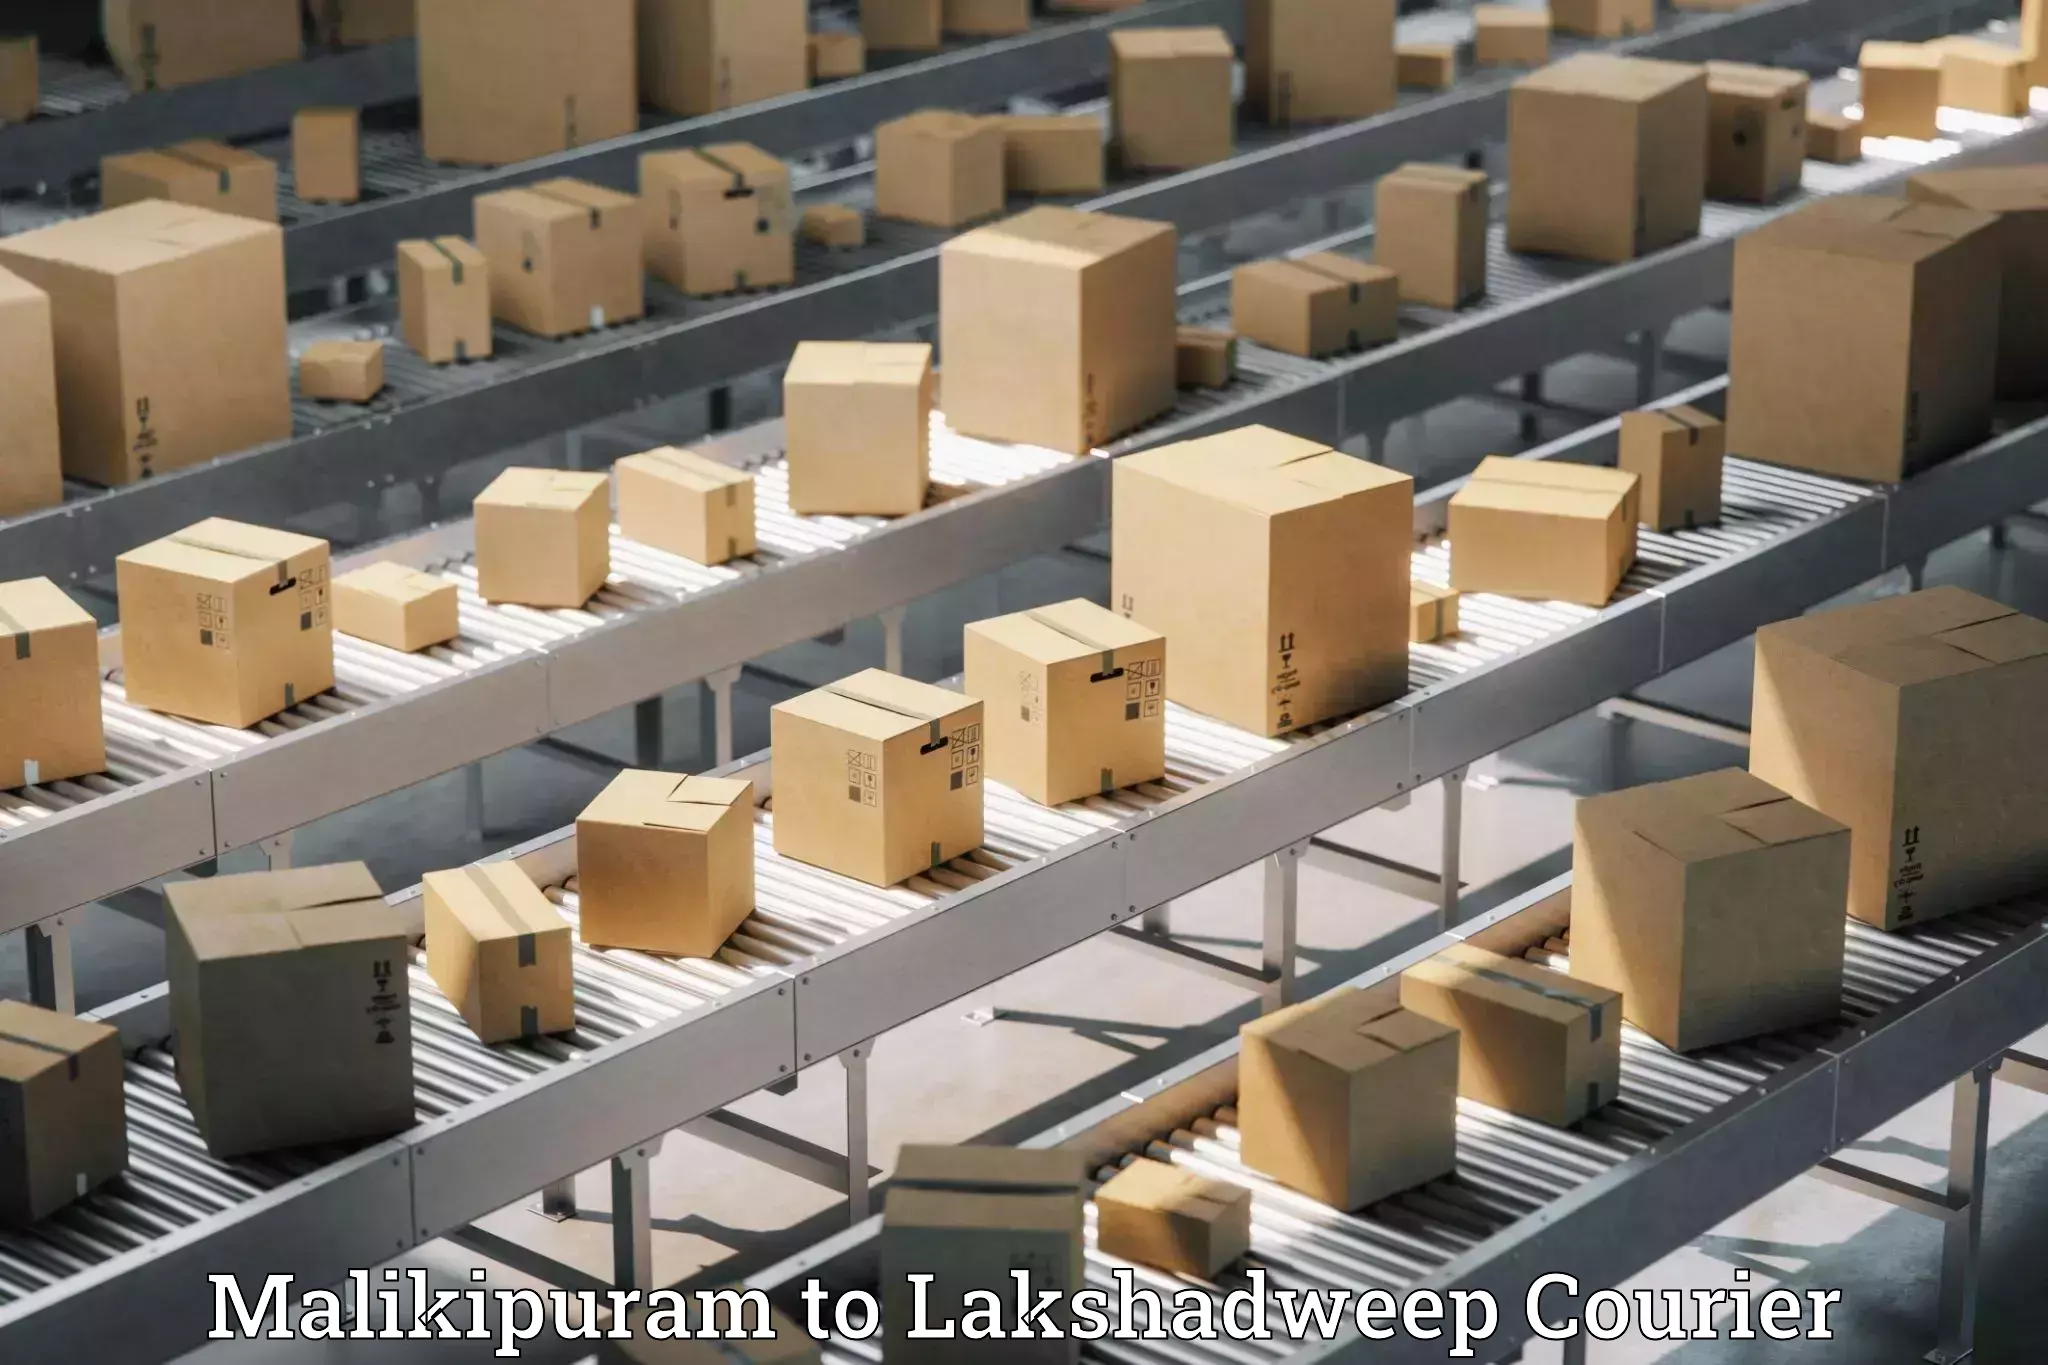 Express logistics providers Malikipuram to Lakshadweep